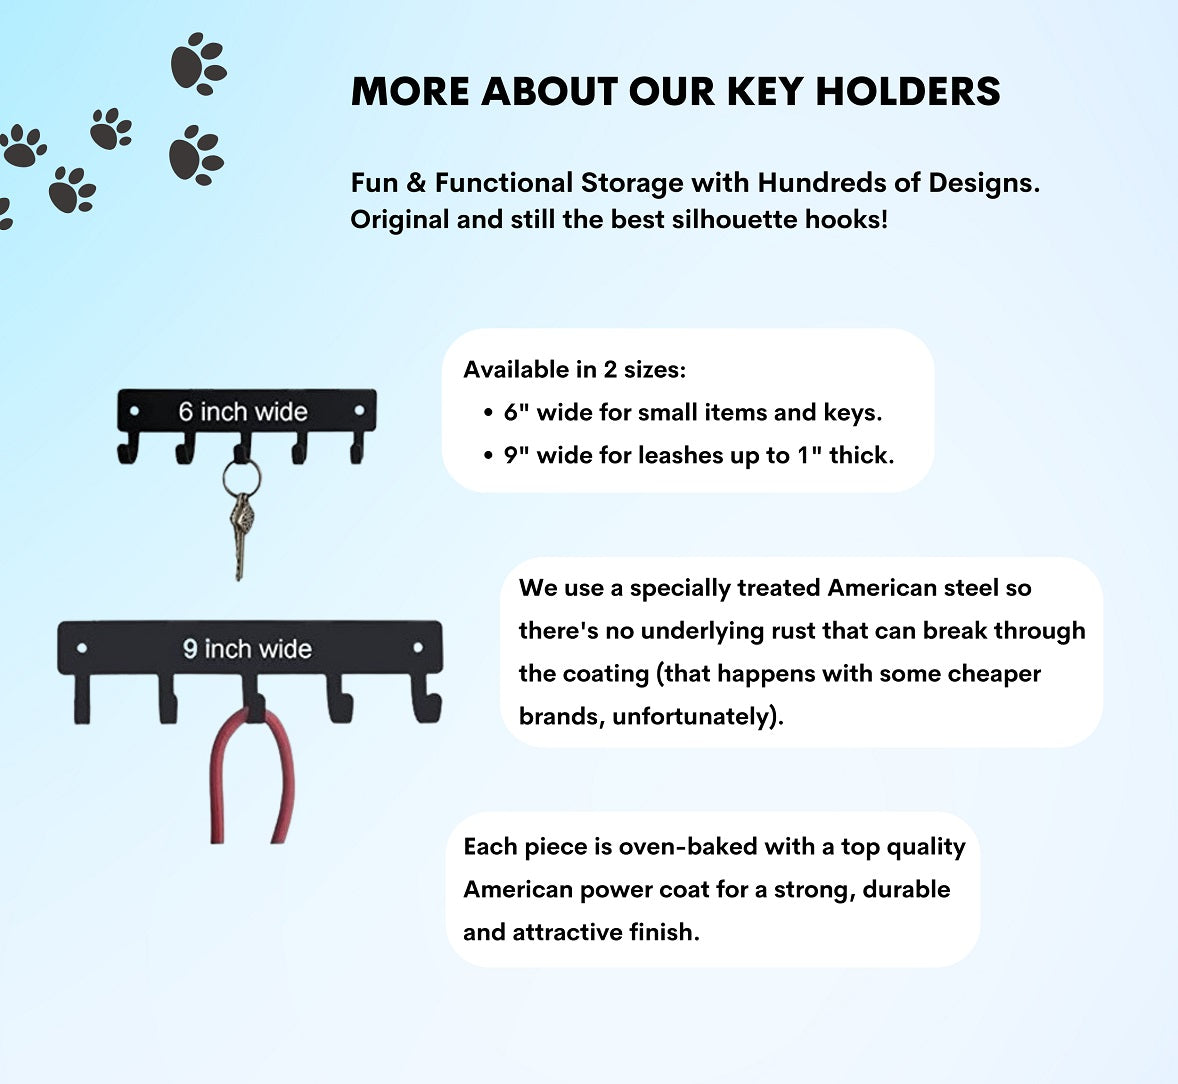 Shiba Inu Dog Key Rack/ Leash Hanger - The Metal Peddler Key Rack breed, Breed S, Dog, key rack, leash hanger, shiba inu